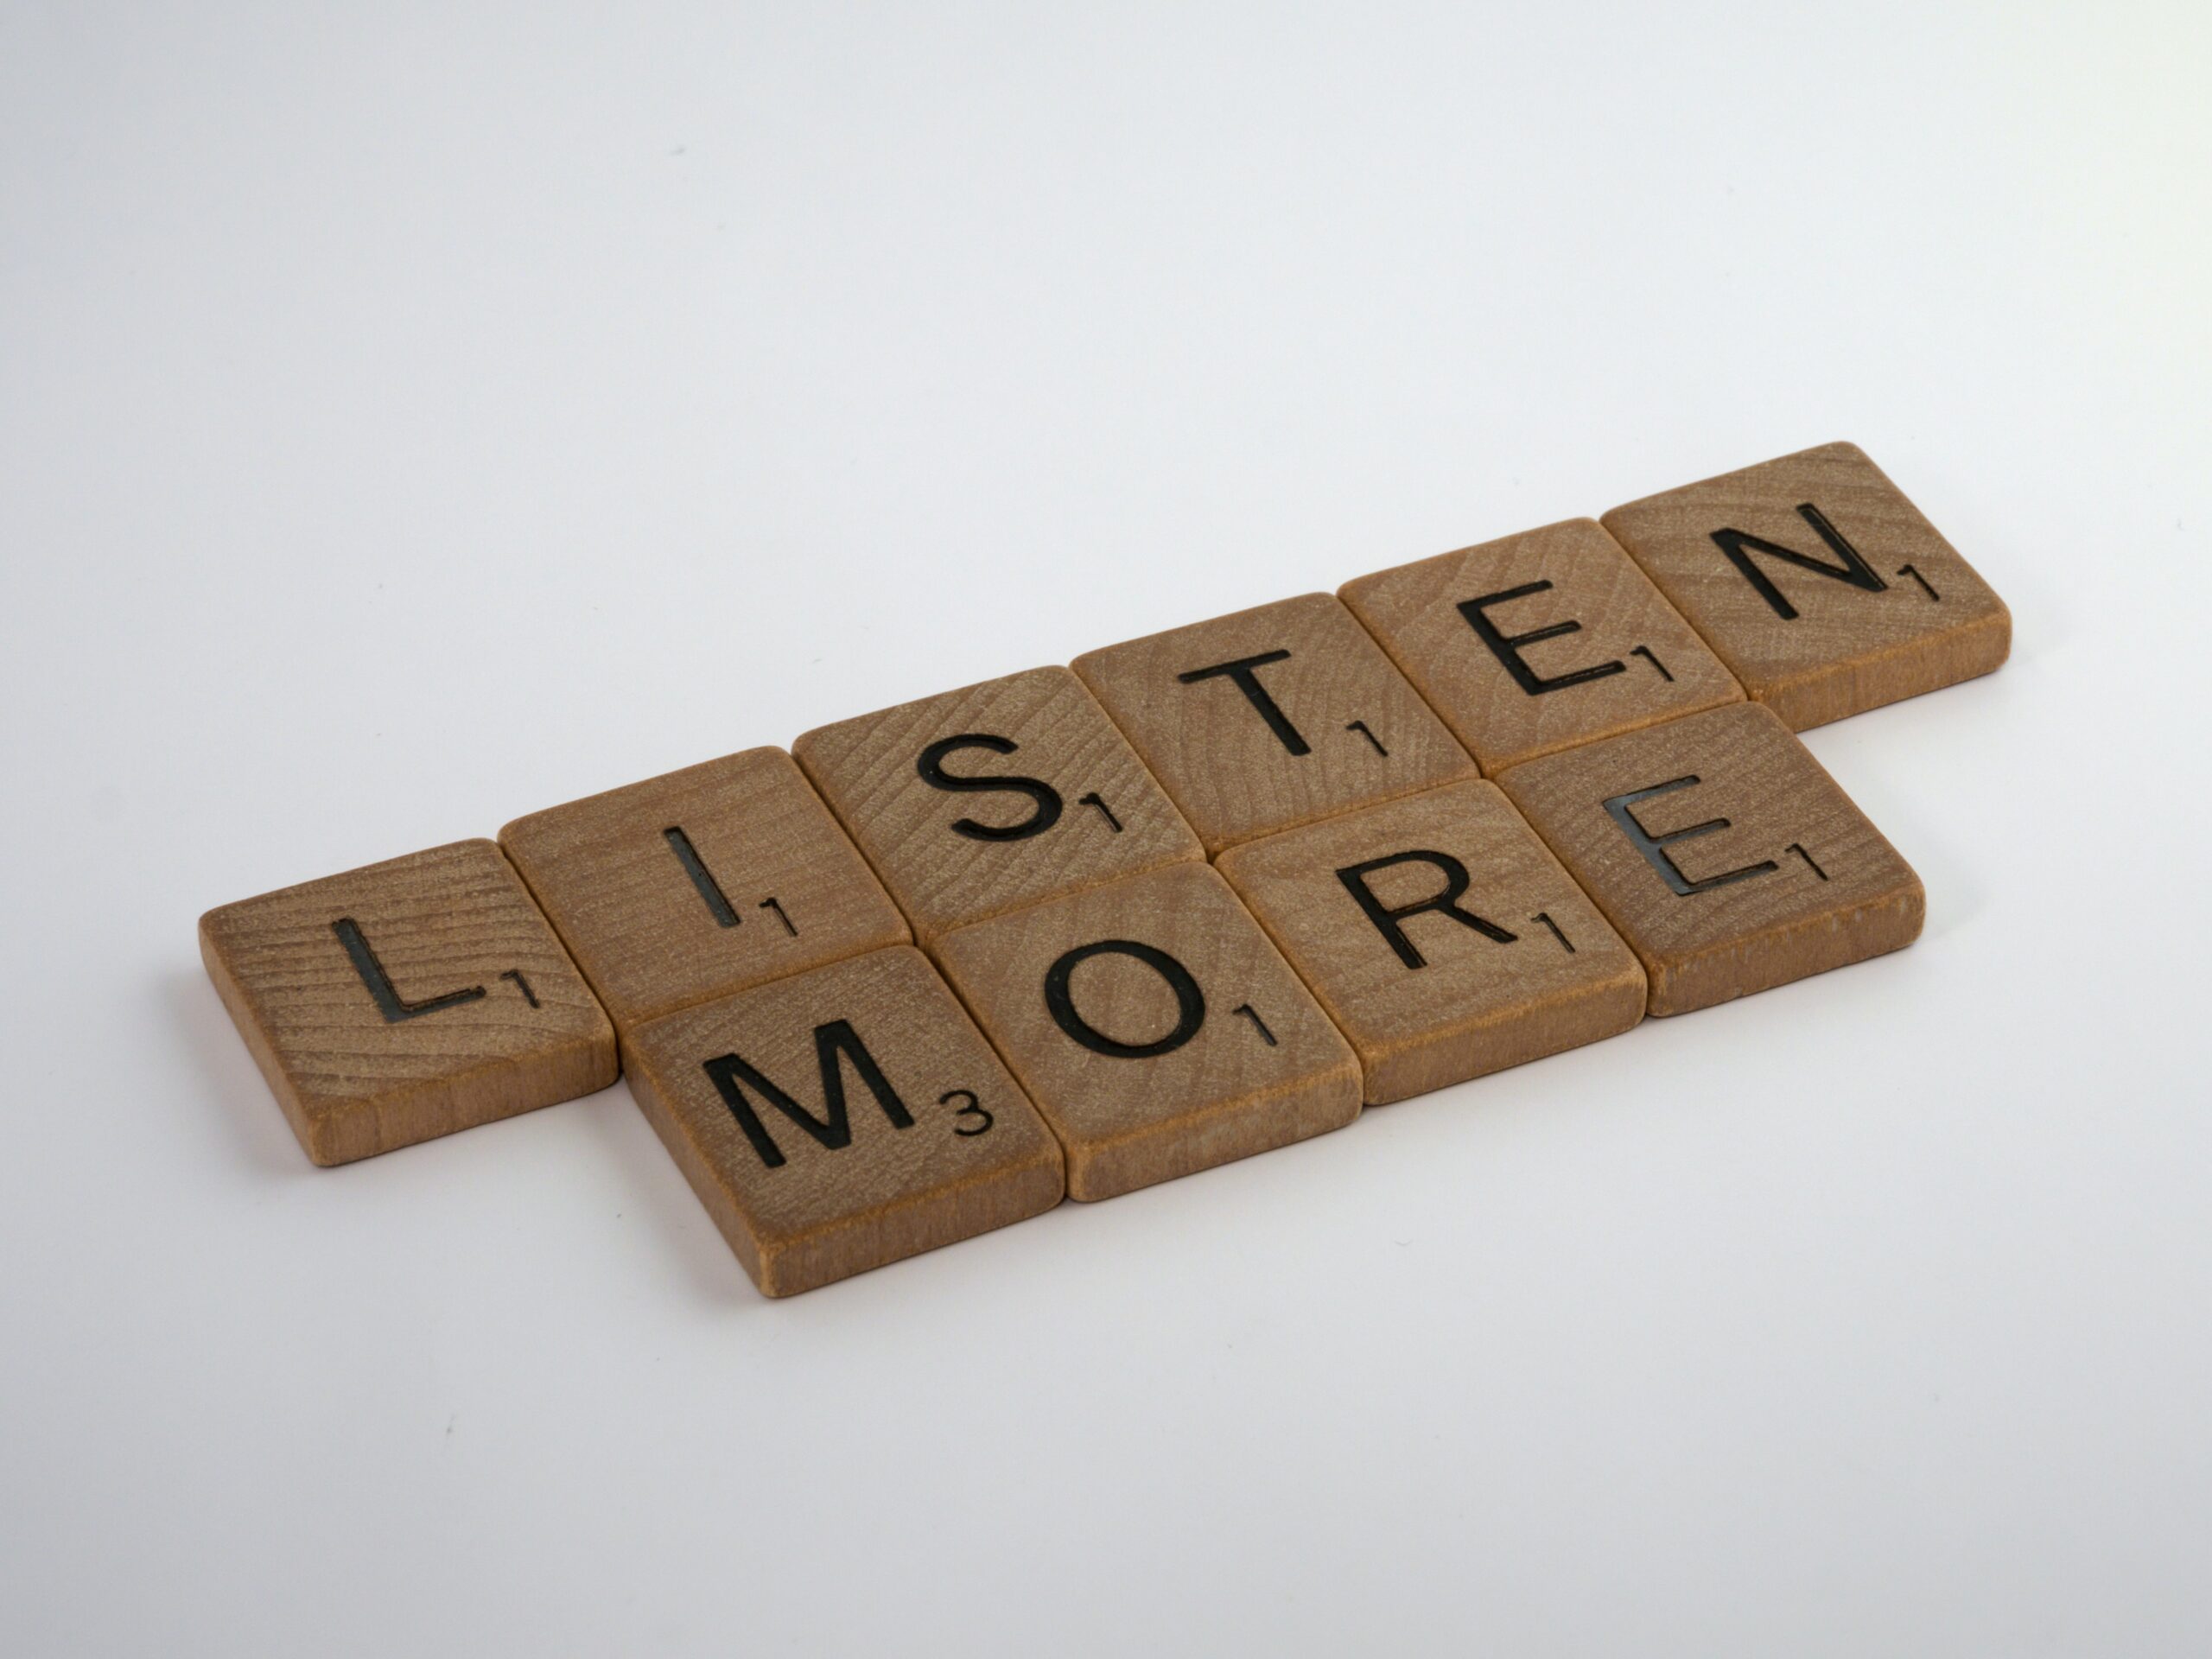 Listening Matters